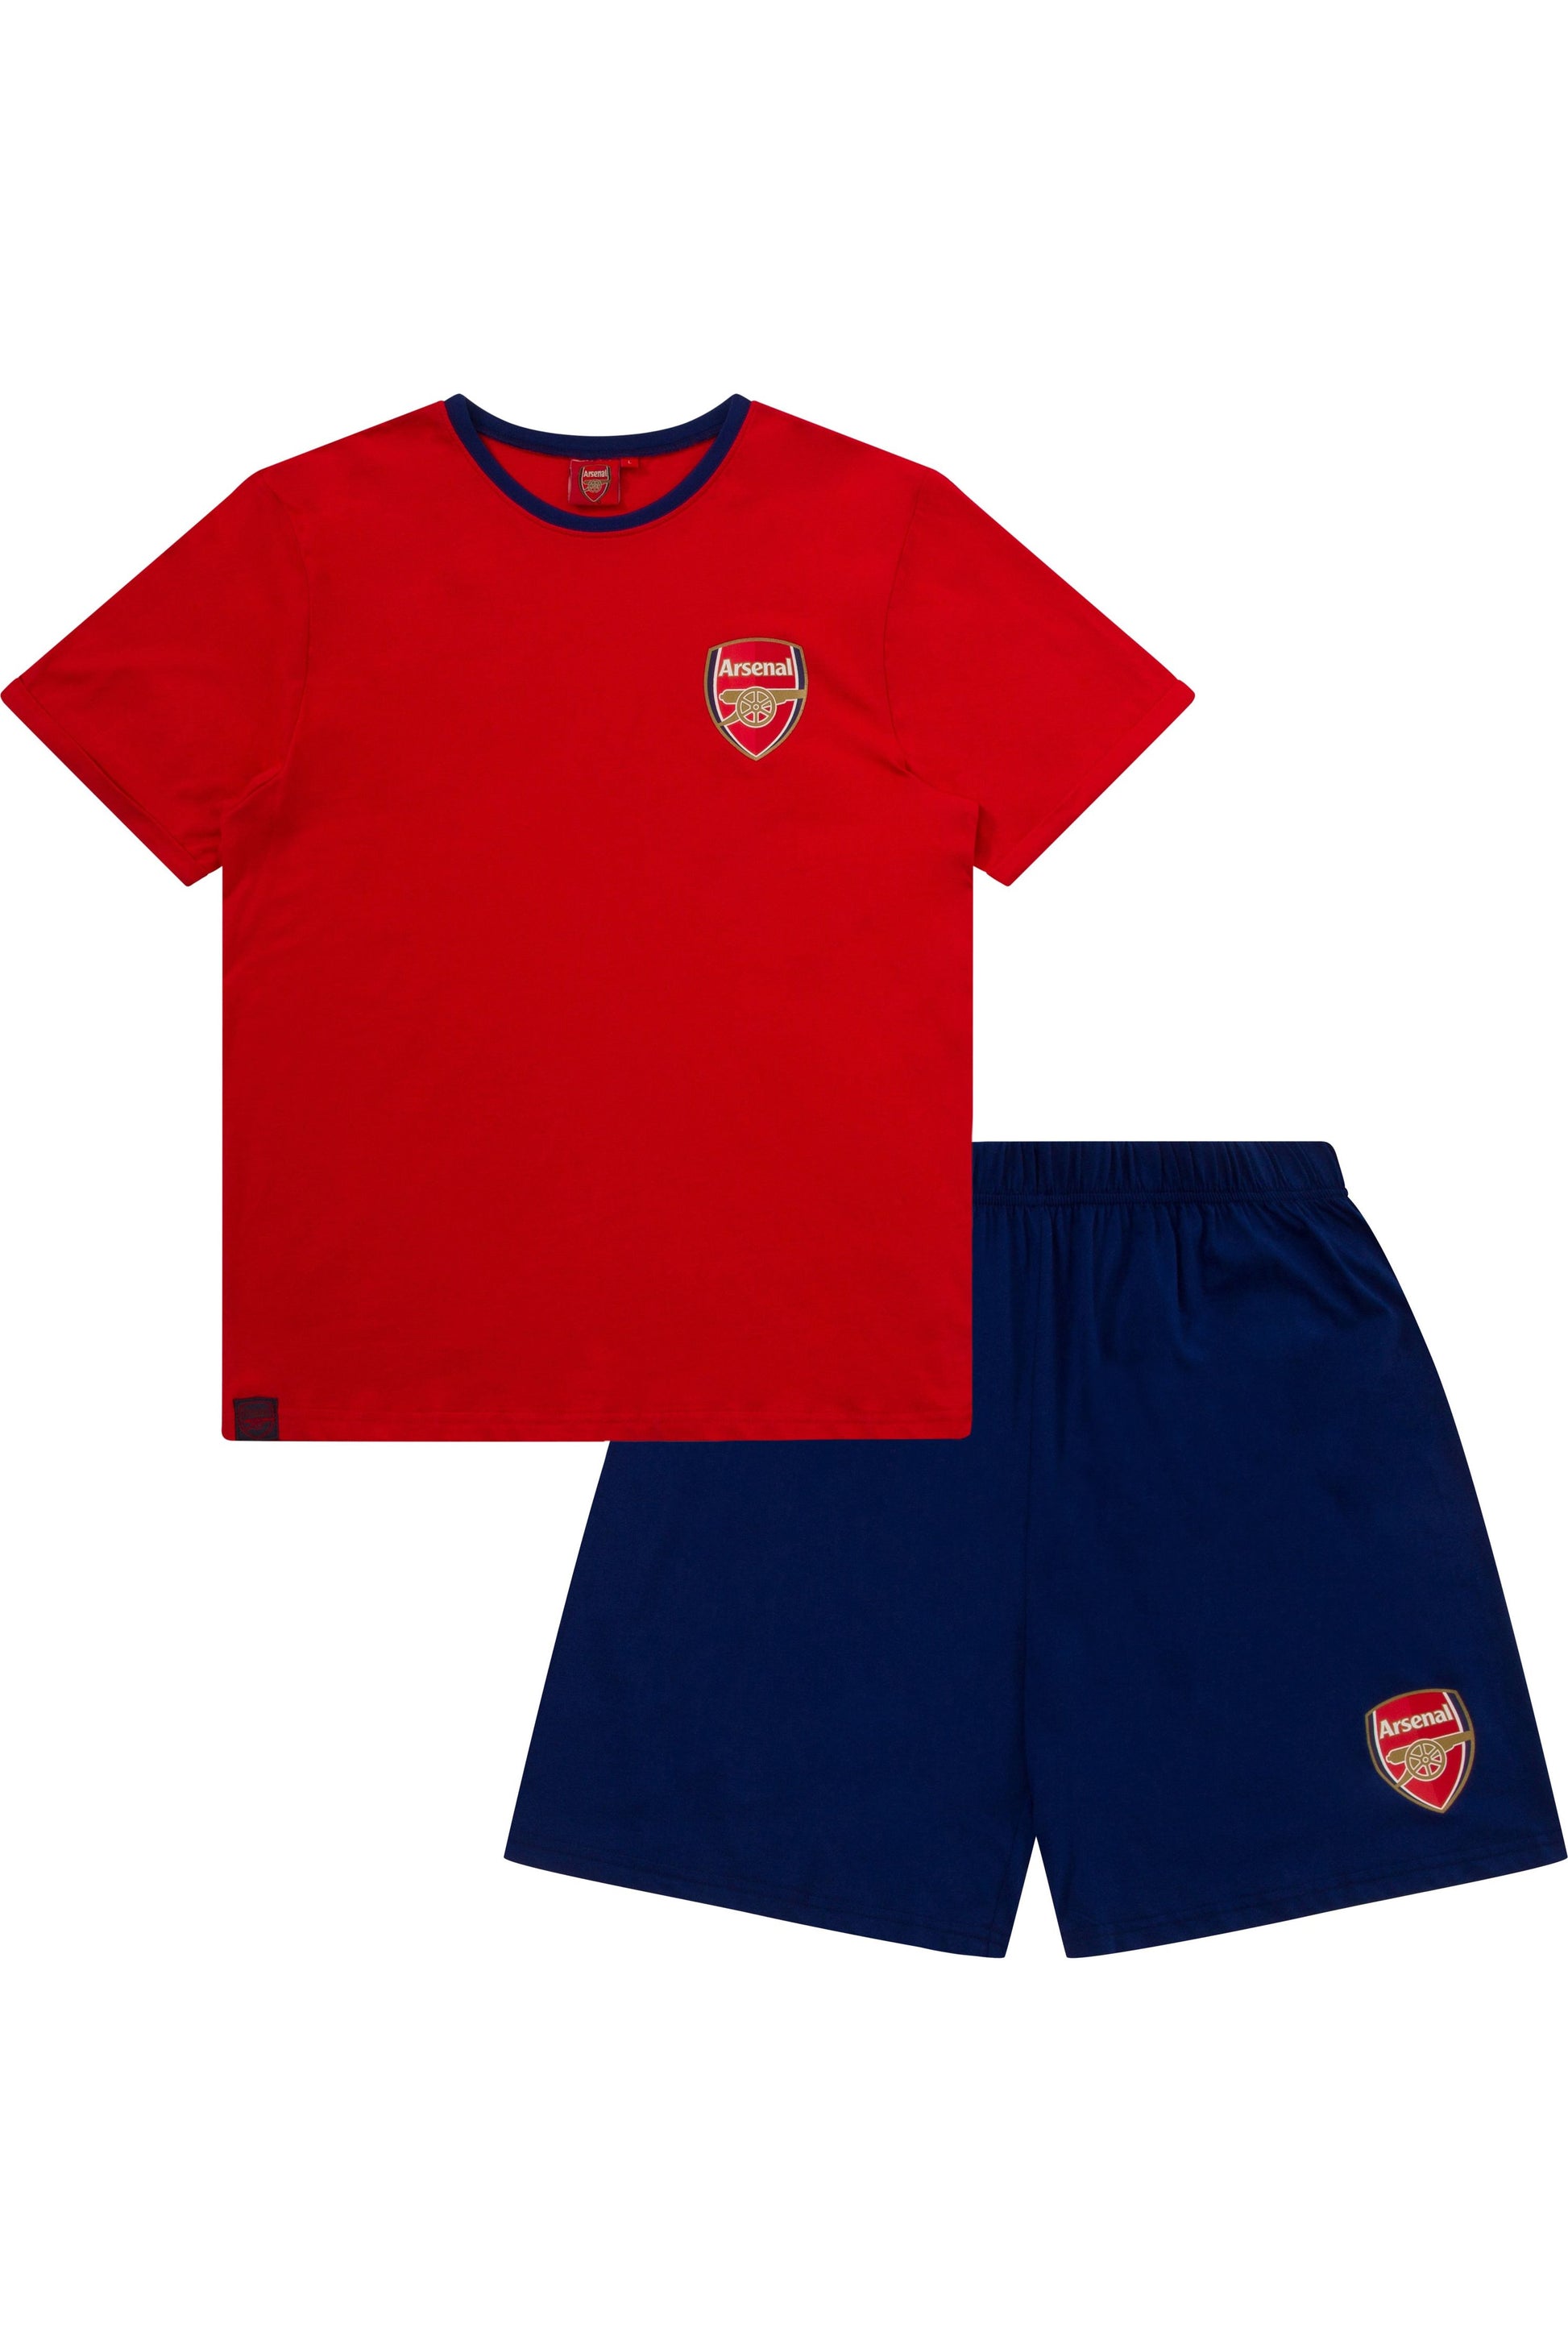 Mens Arsenal FC Short Pyjamas - Pyjamas.com